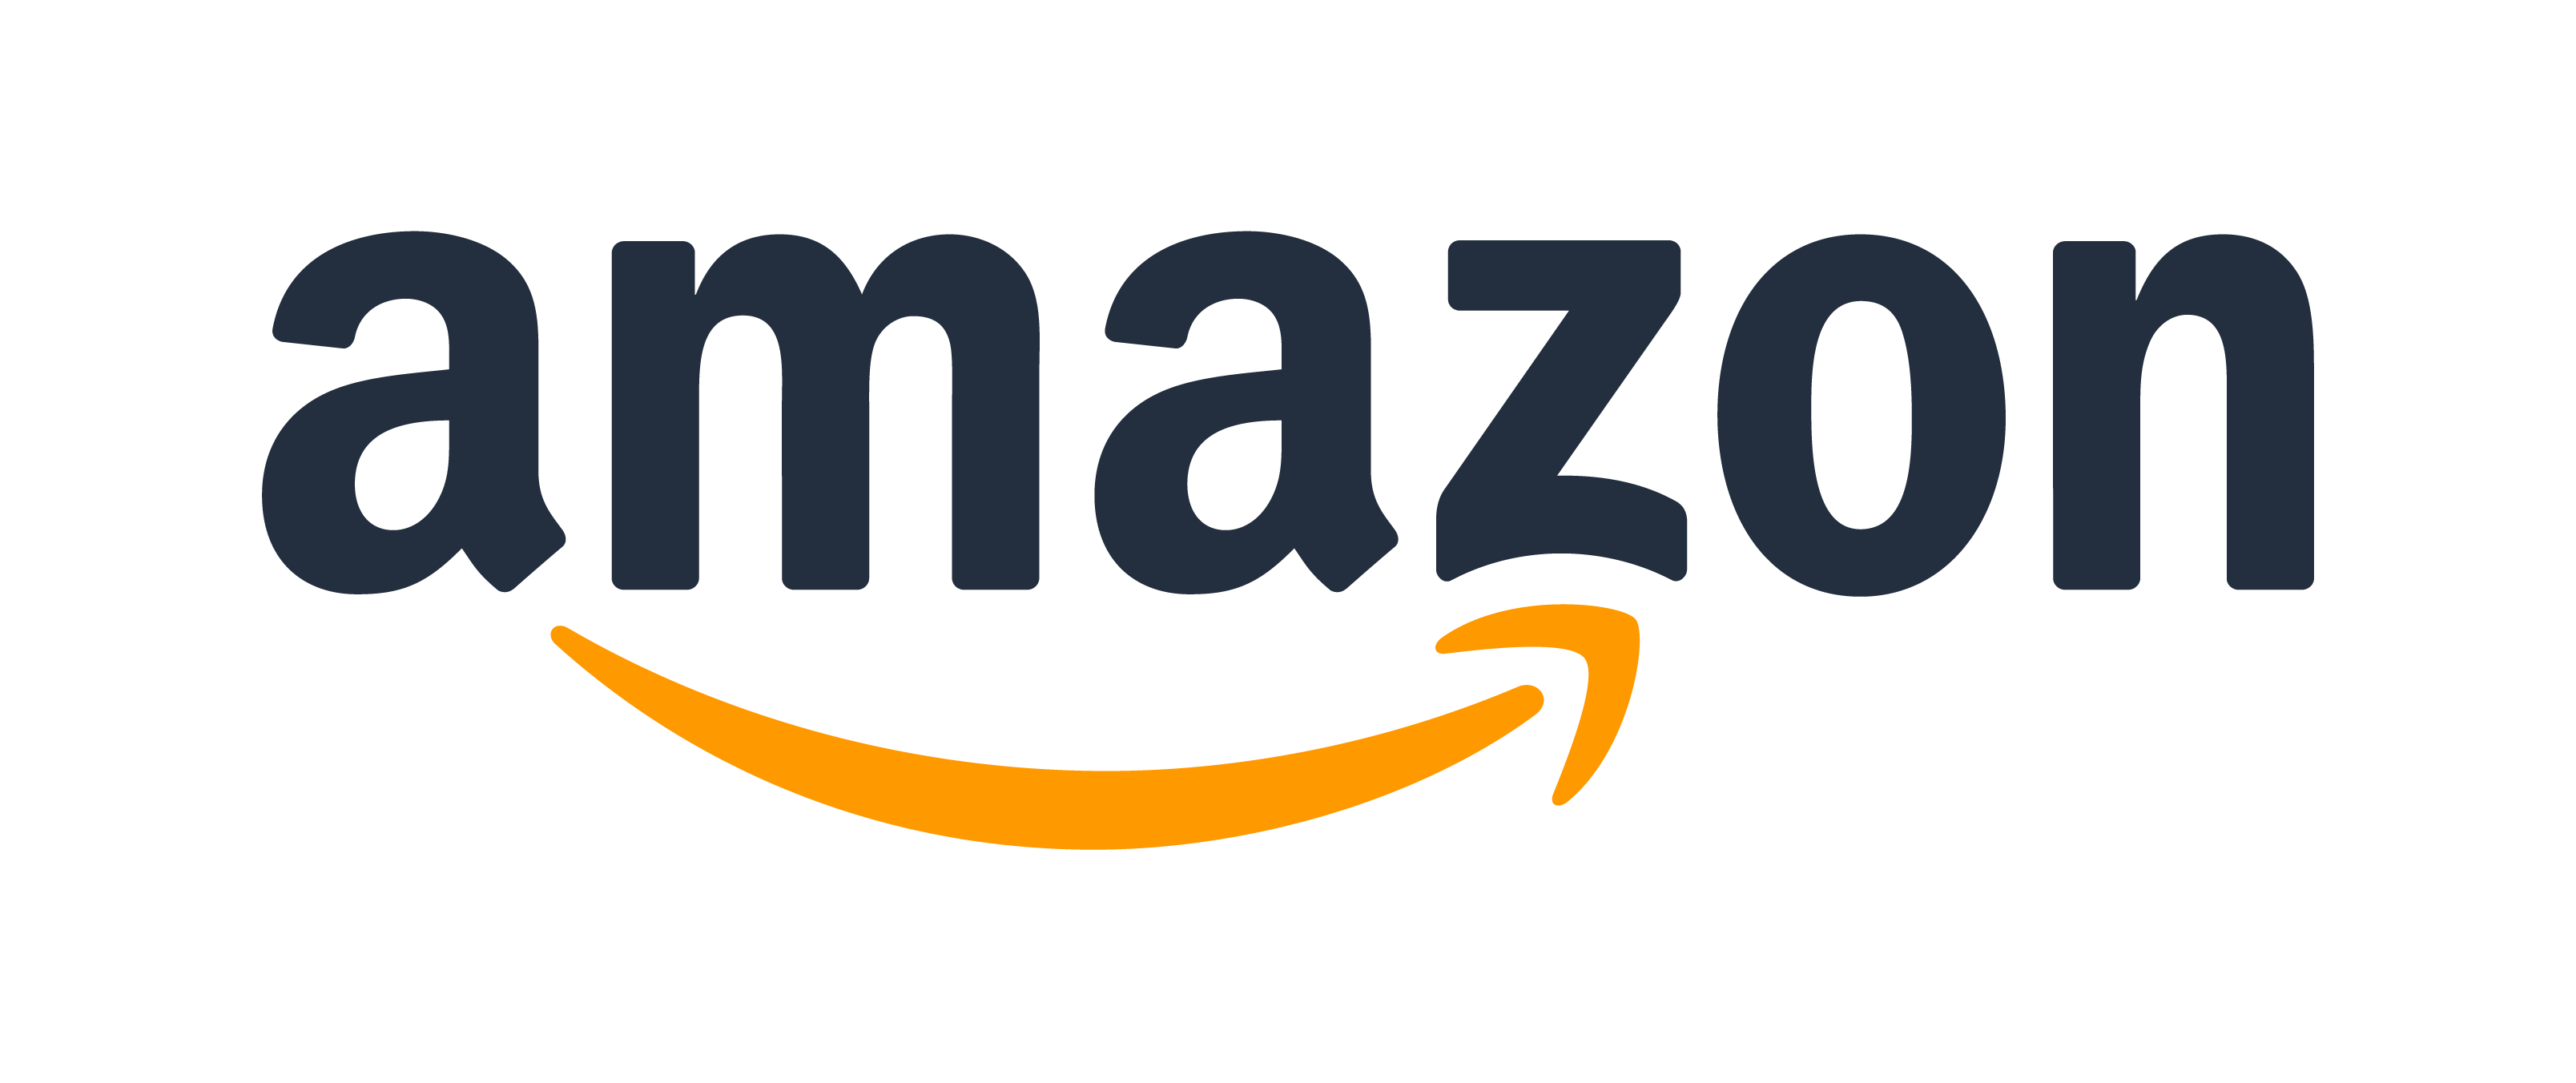 Amazon Corporate Logo - Images and videos | Amazon.com, Inc. - Press Room